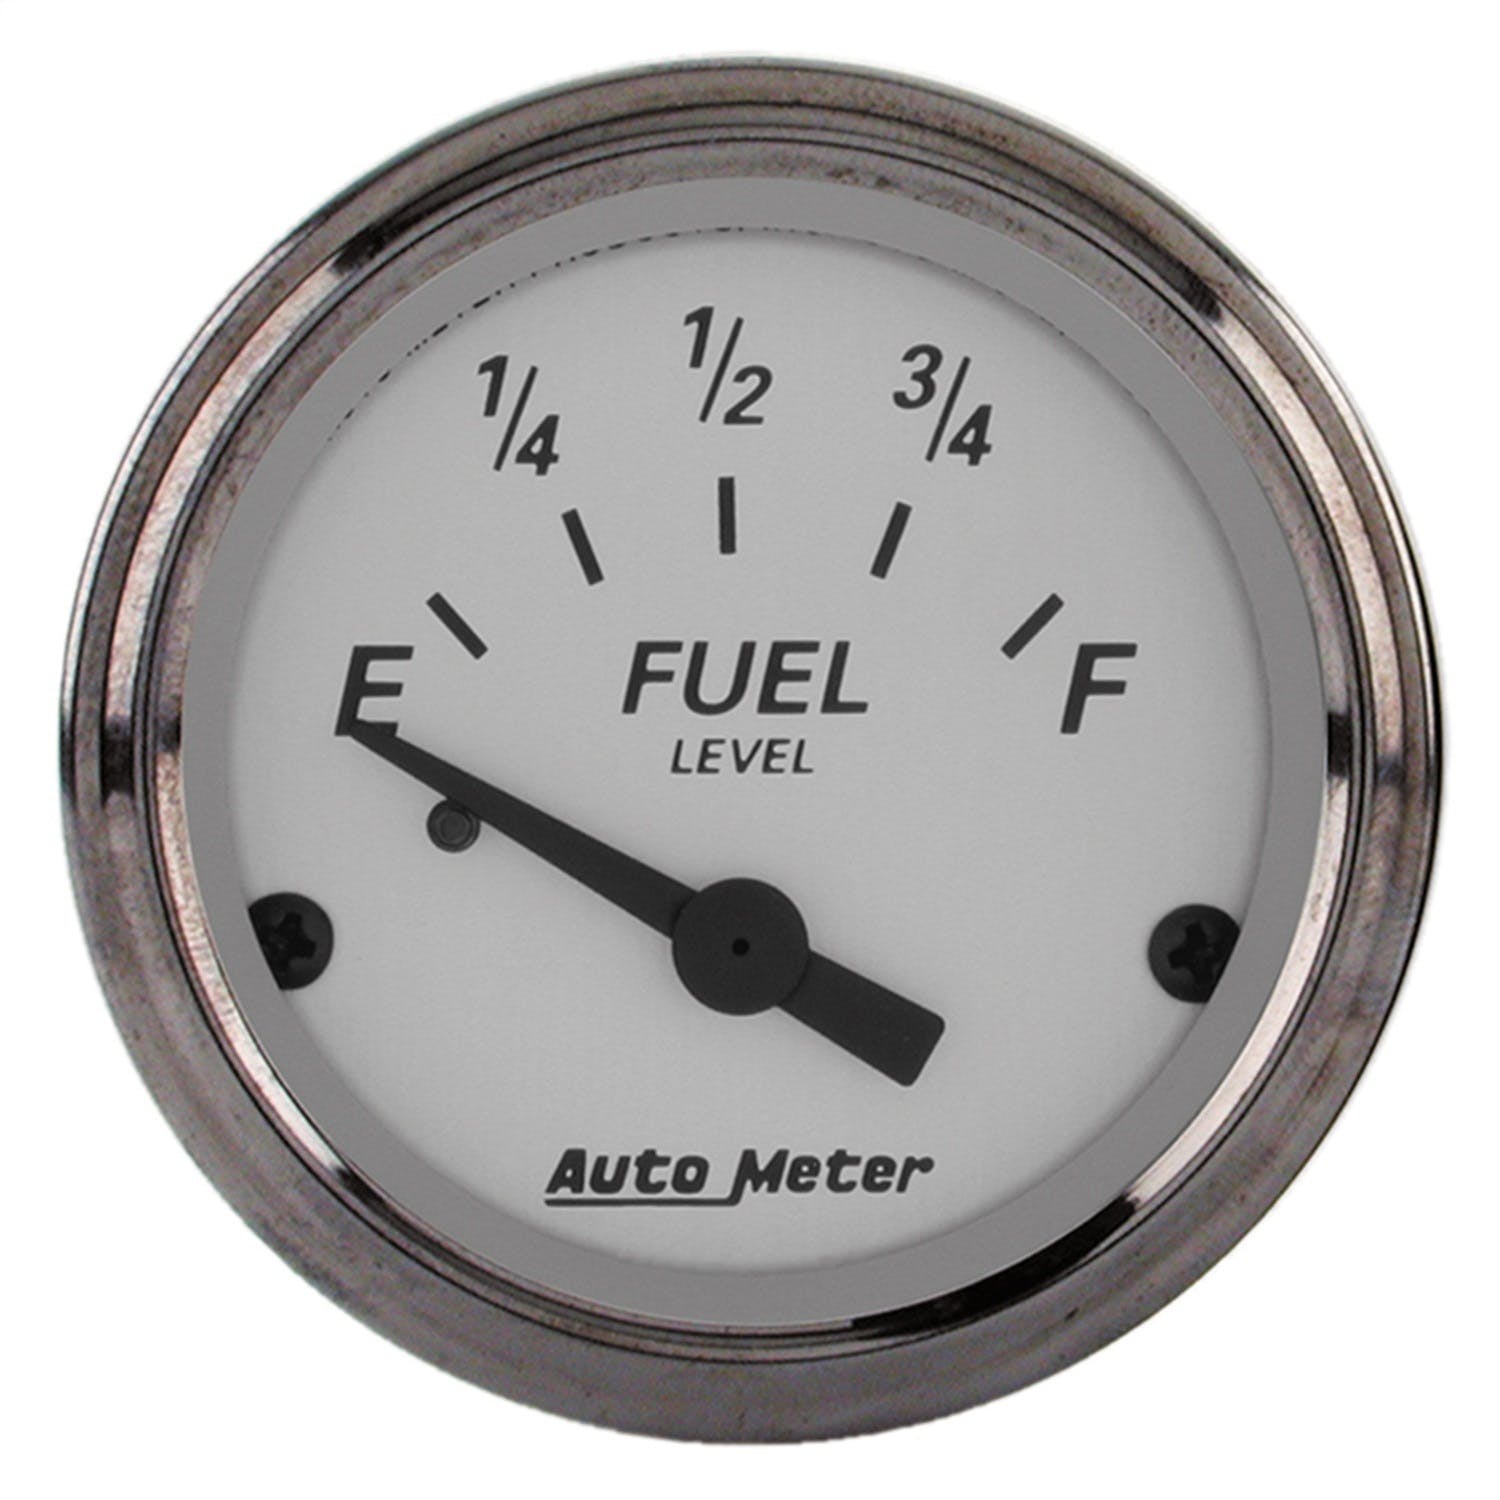 AutoMeter Products 1905 Fuel Level Gauge 73 E/8-12 F